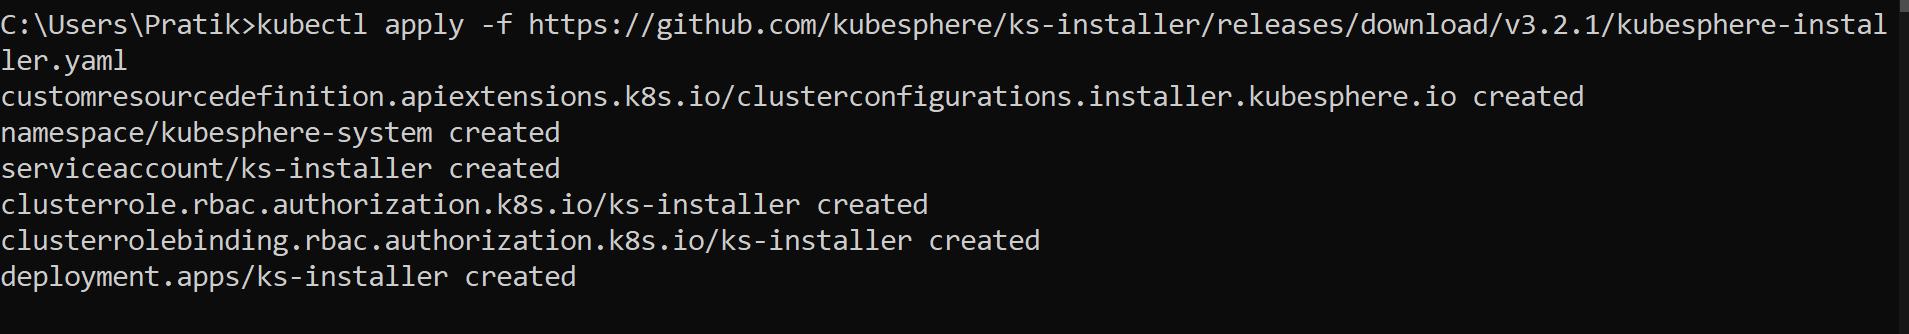 Kubesphere-installer.PNG